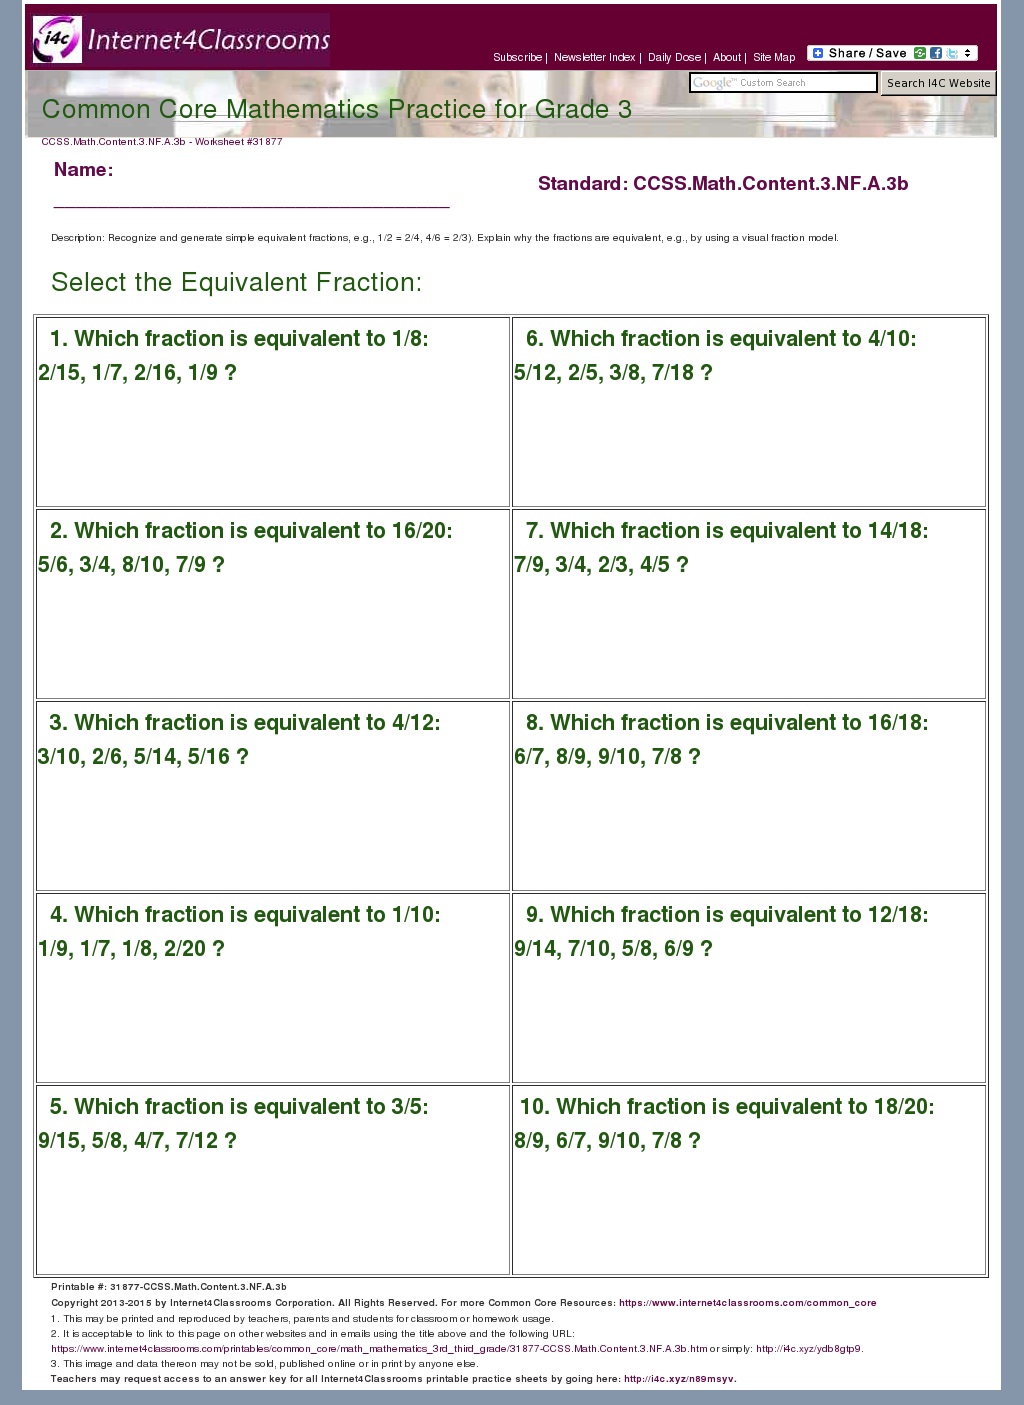 Description Download Worksheet 31877 CCSS Math Content 3 NF A 3b